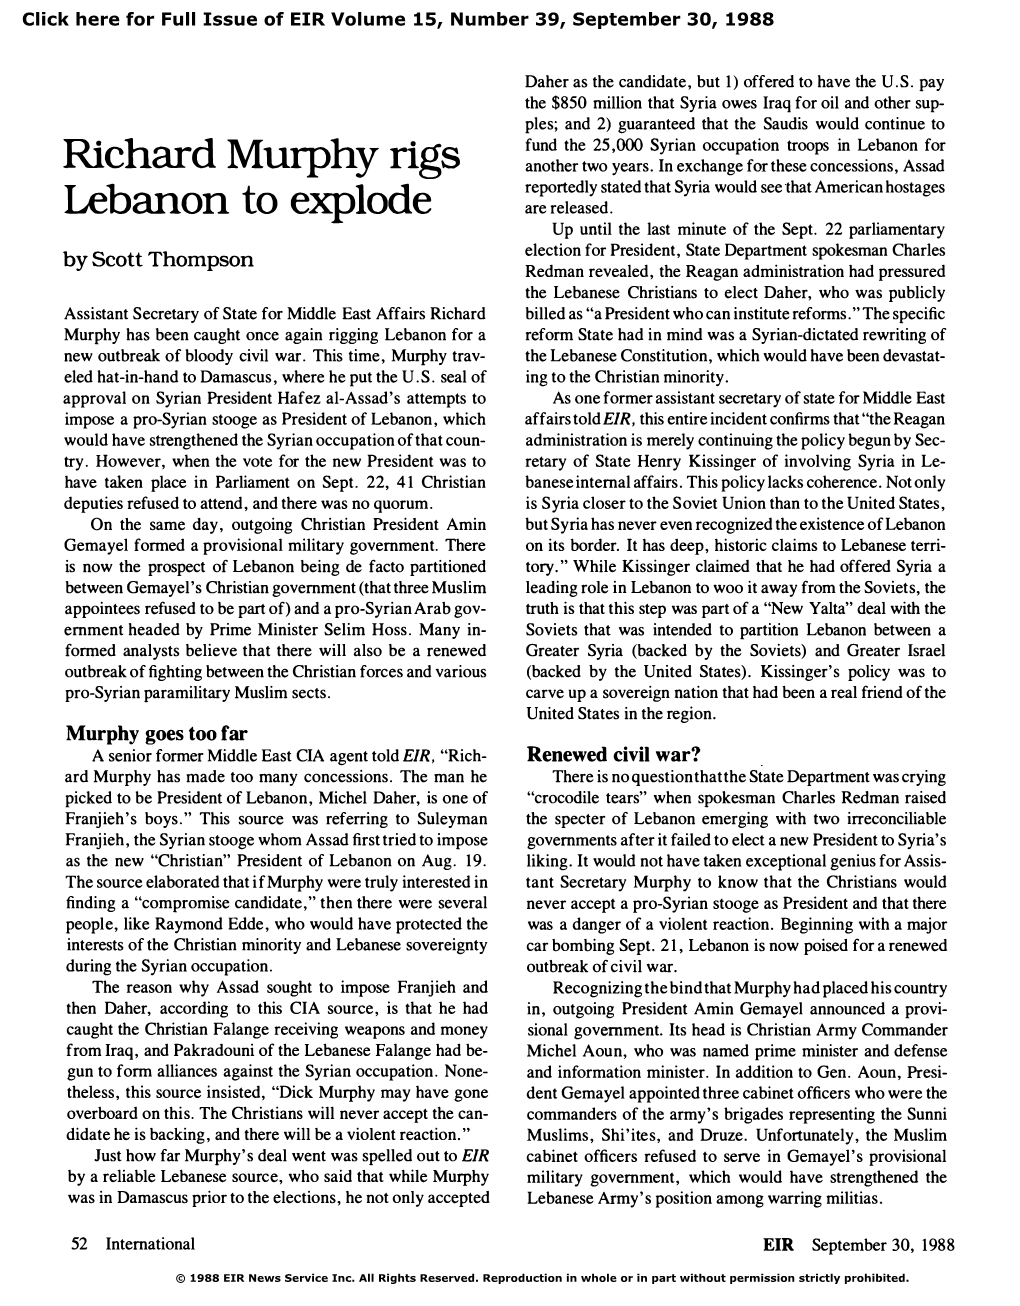 Richard Murphy Rigs Lebanon to Explode